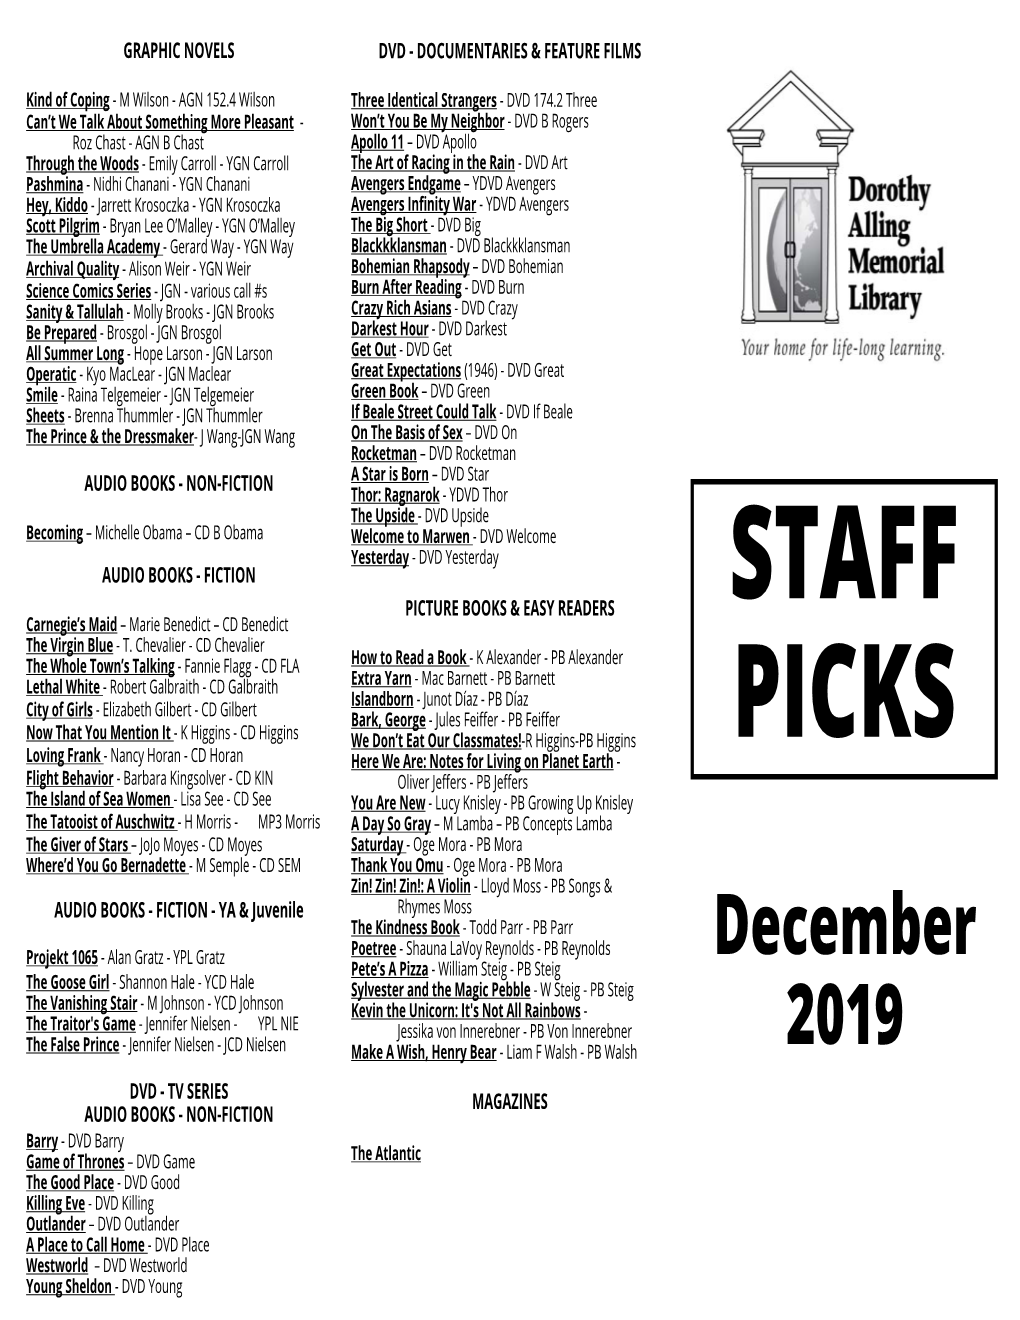 2019-December Staff Picks Brochure.Pub